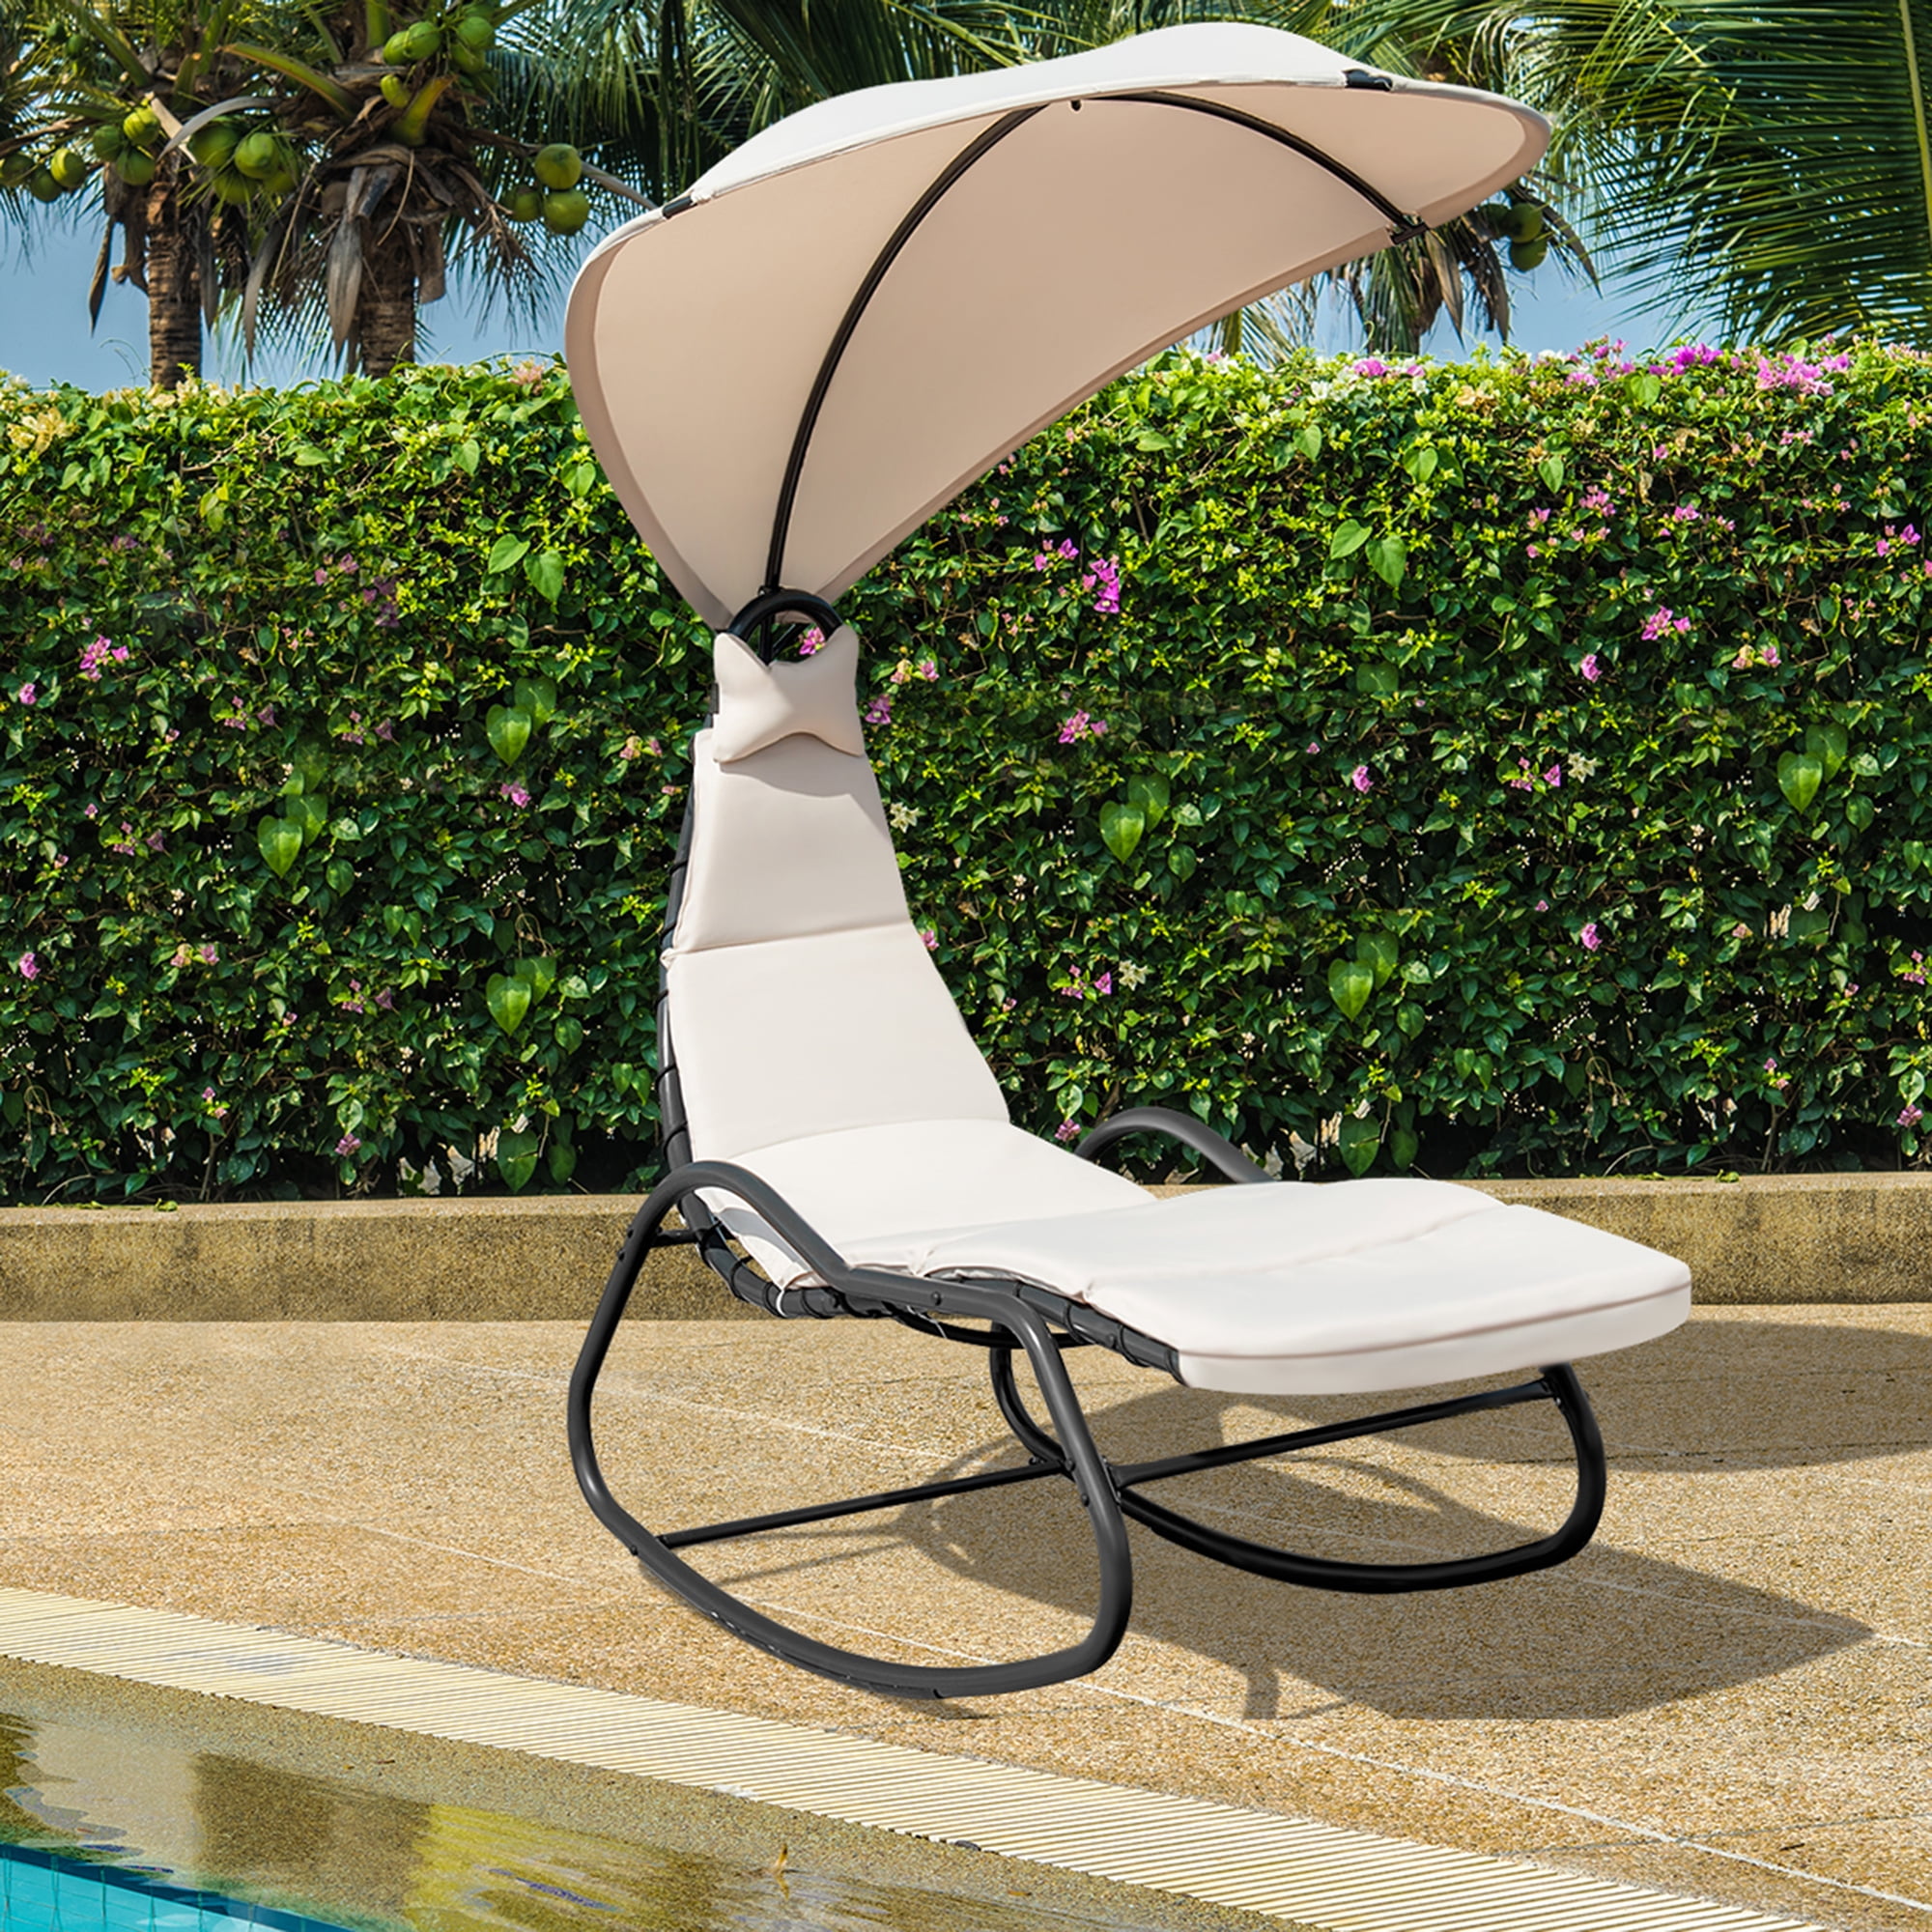 Garden Hammock Chaise Hanging Swing Lounger Chair Seat Sun Outdoor W/Cushion UK 